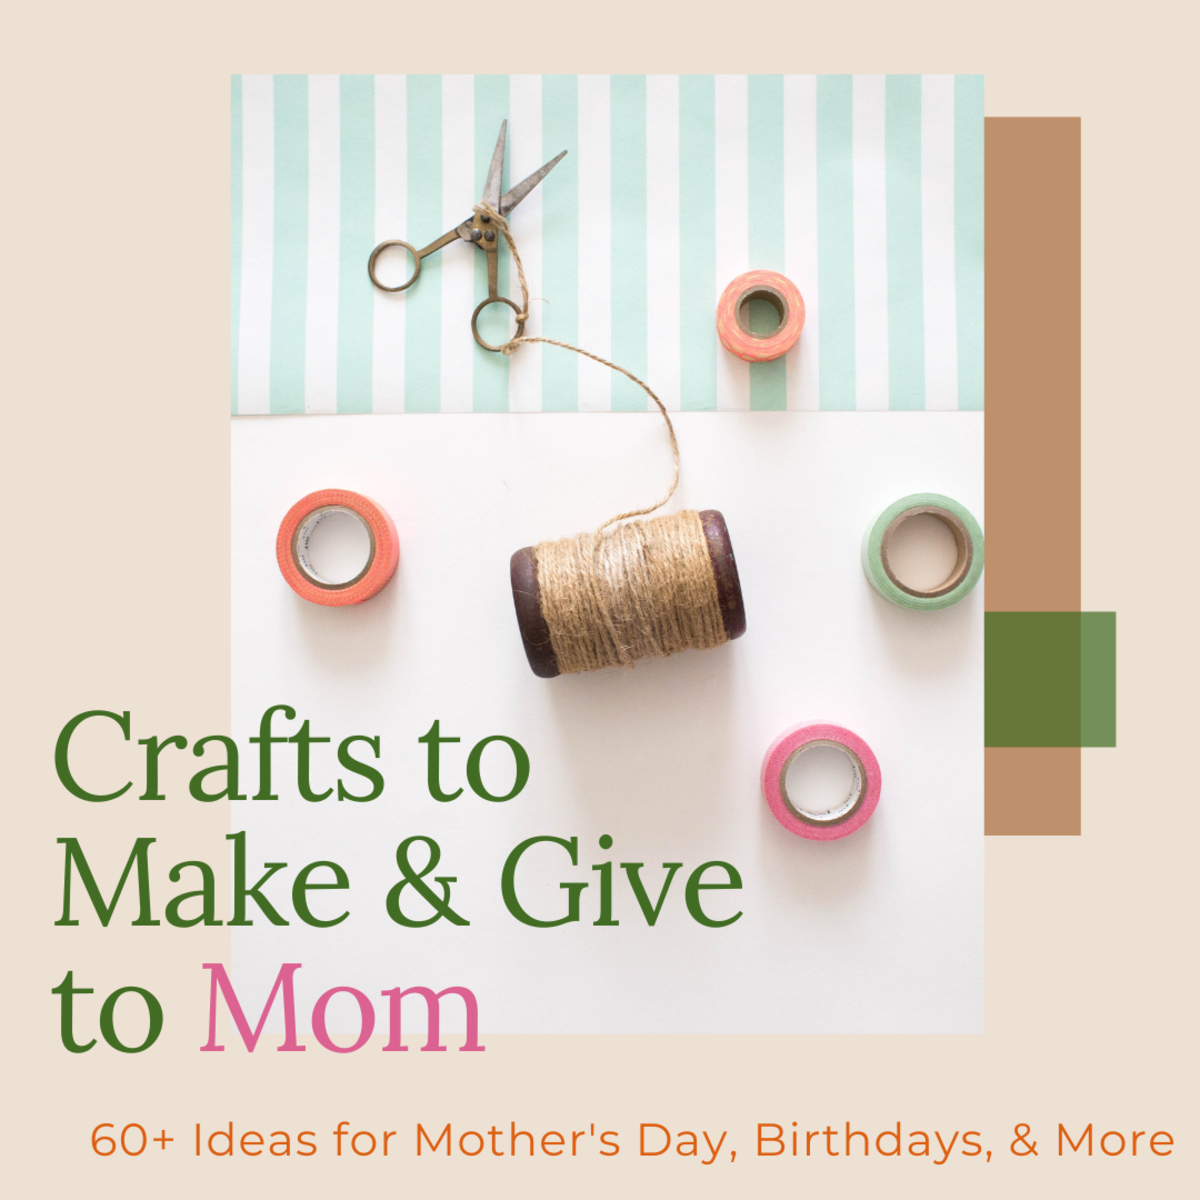 https://images.saymedia-content.com/.image/t_share/MTgwNDg1NDU4NjE3MTgxNjU3/best-homemade-gifts-for-mom.png